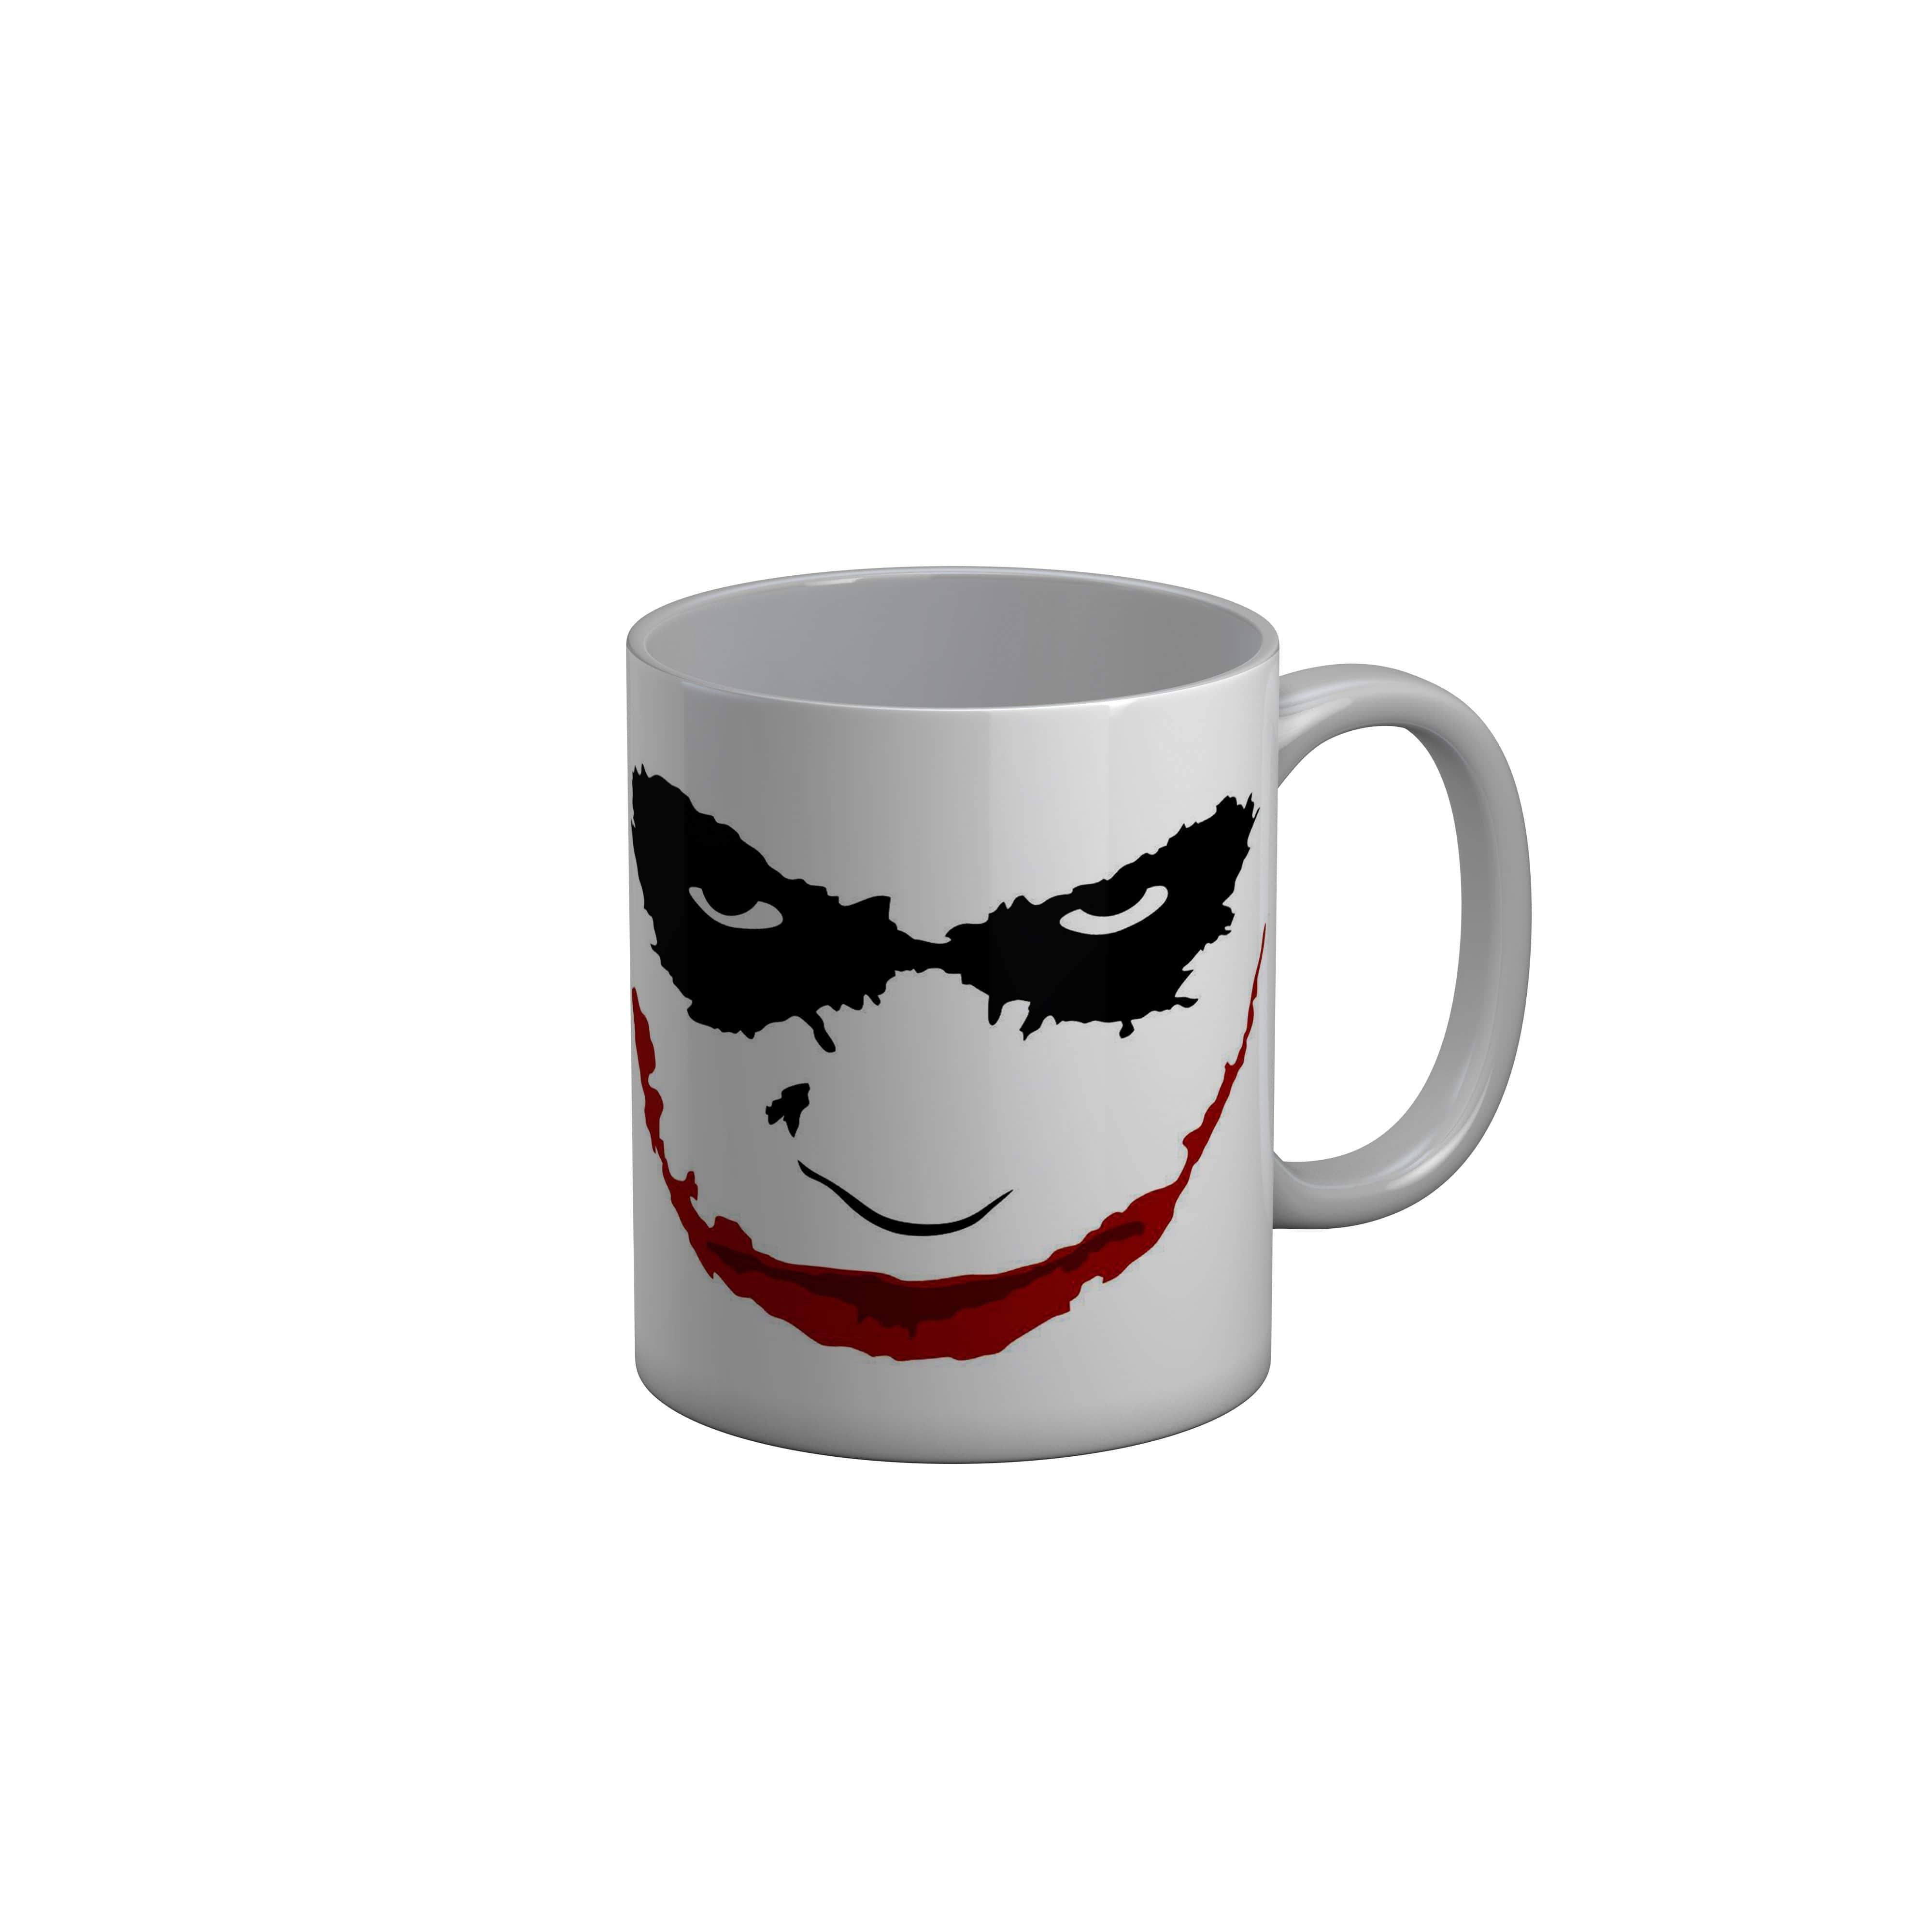 FashionRazor Angry Face White Ceramic Coffee Mug, 350 ml Mug FashionRazor